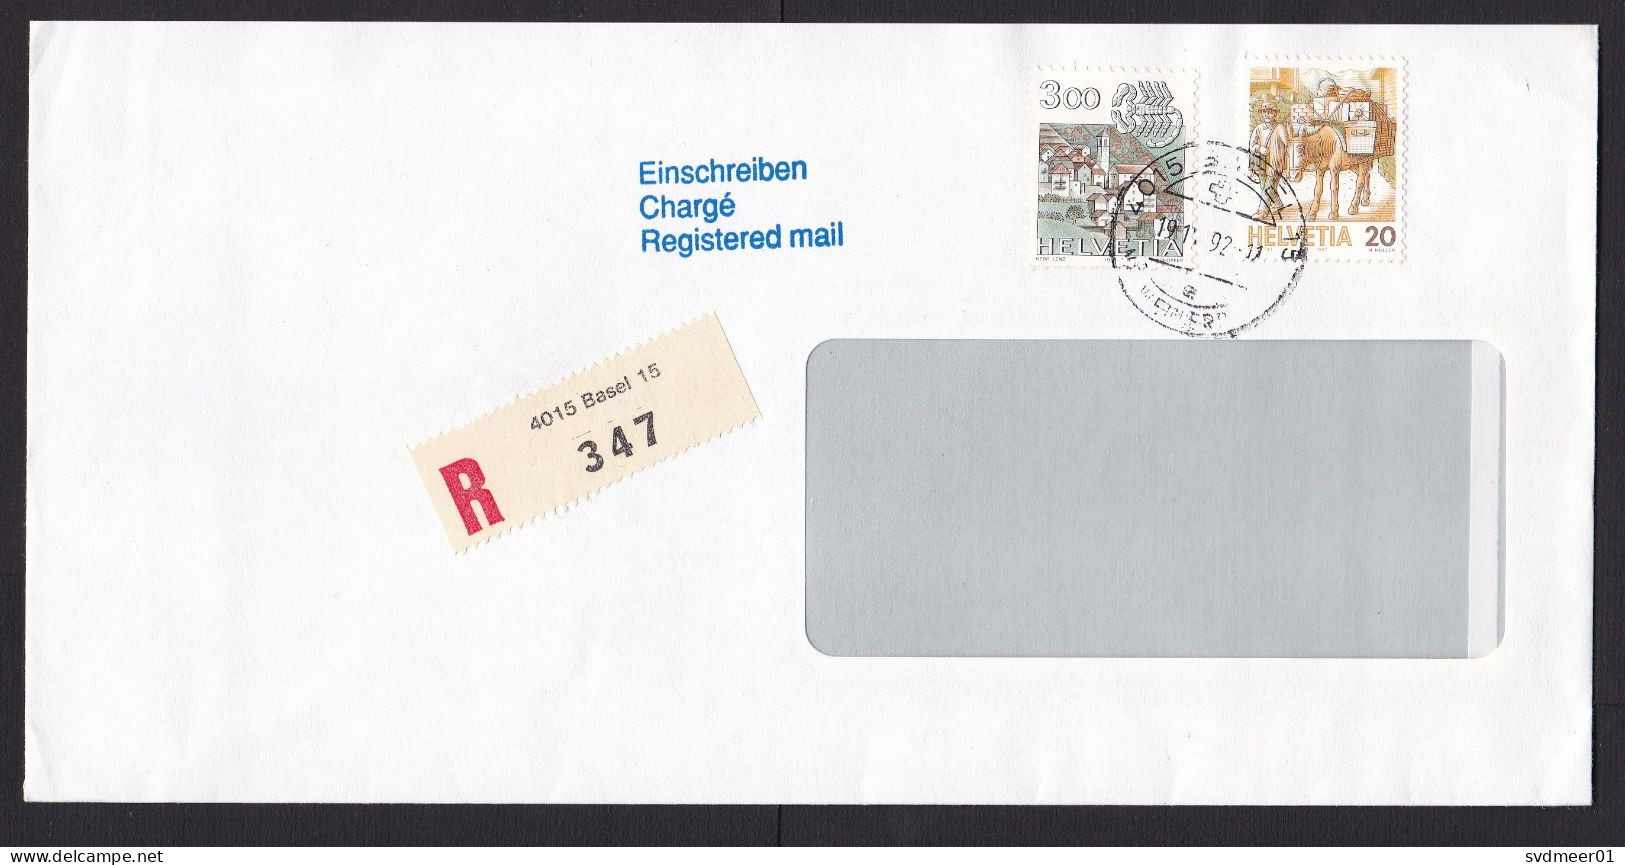 Switzerland: Registered Cover, 1992, 2 Stamps, Zodiac Sign, Lobster, Donkey Transport, R-label Basel (traces Of Use) - Brieven En Documenten